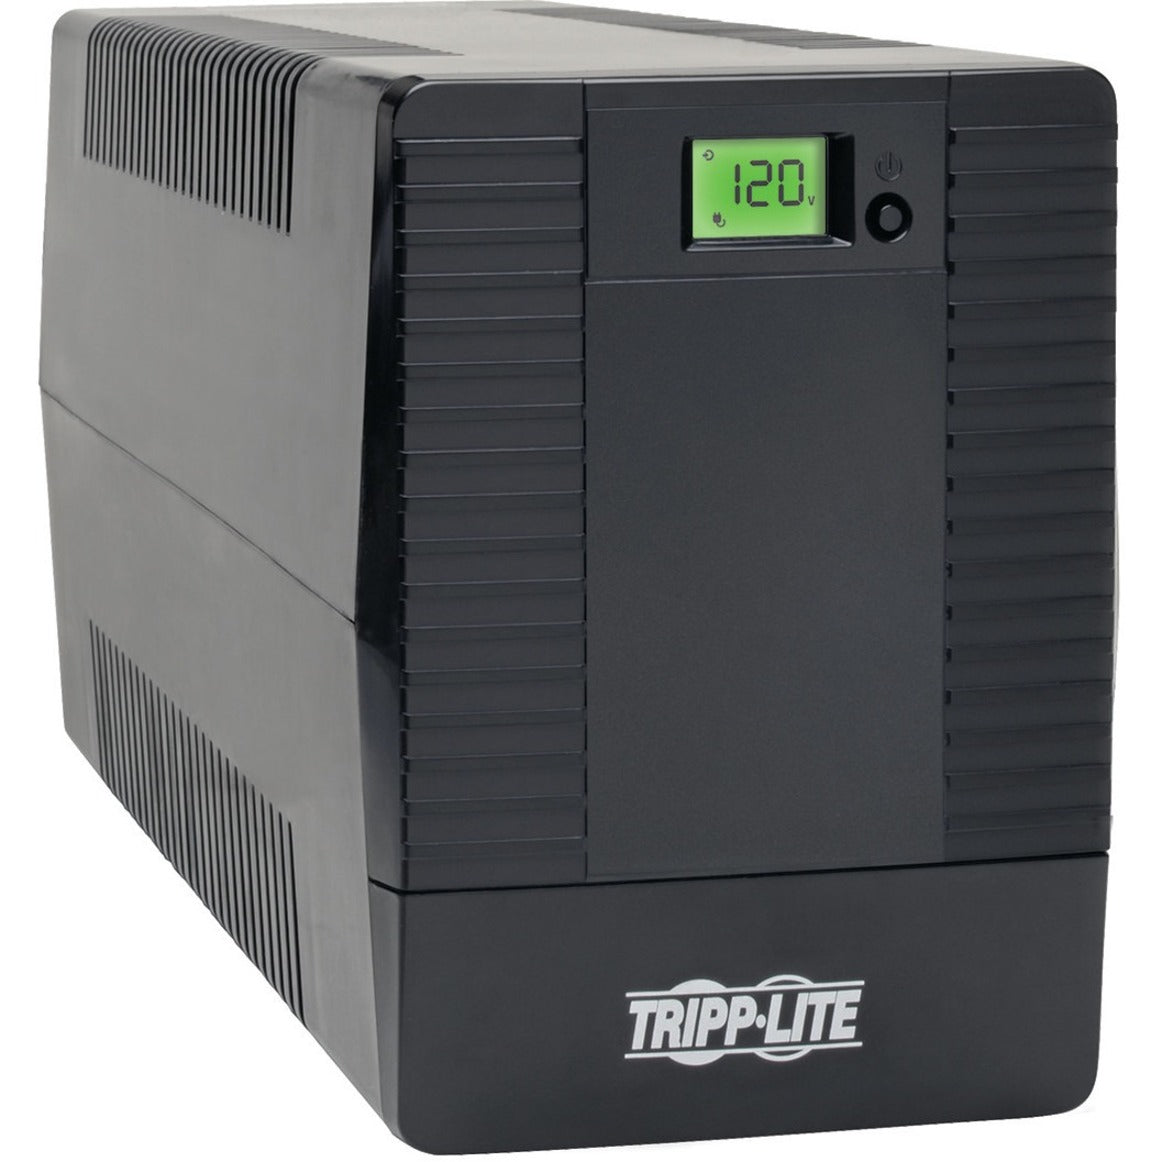 Tripp Lite SMART750TSU 750VA Tower UPS, AVR LCD, 3 Year Warranty, Overload Alarm